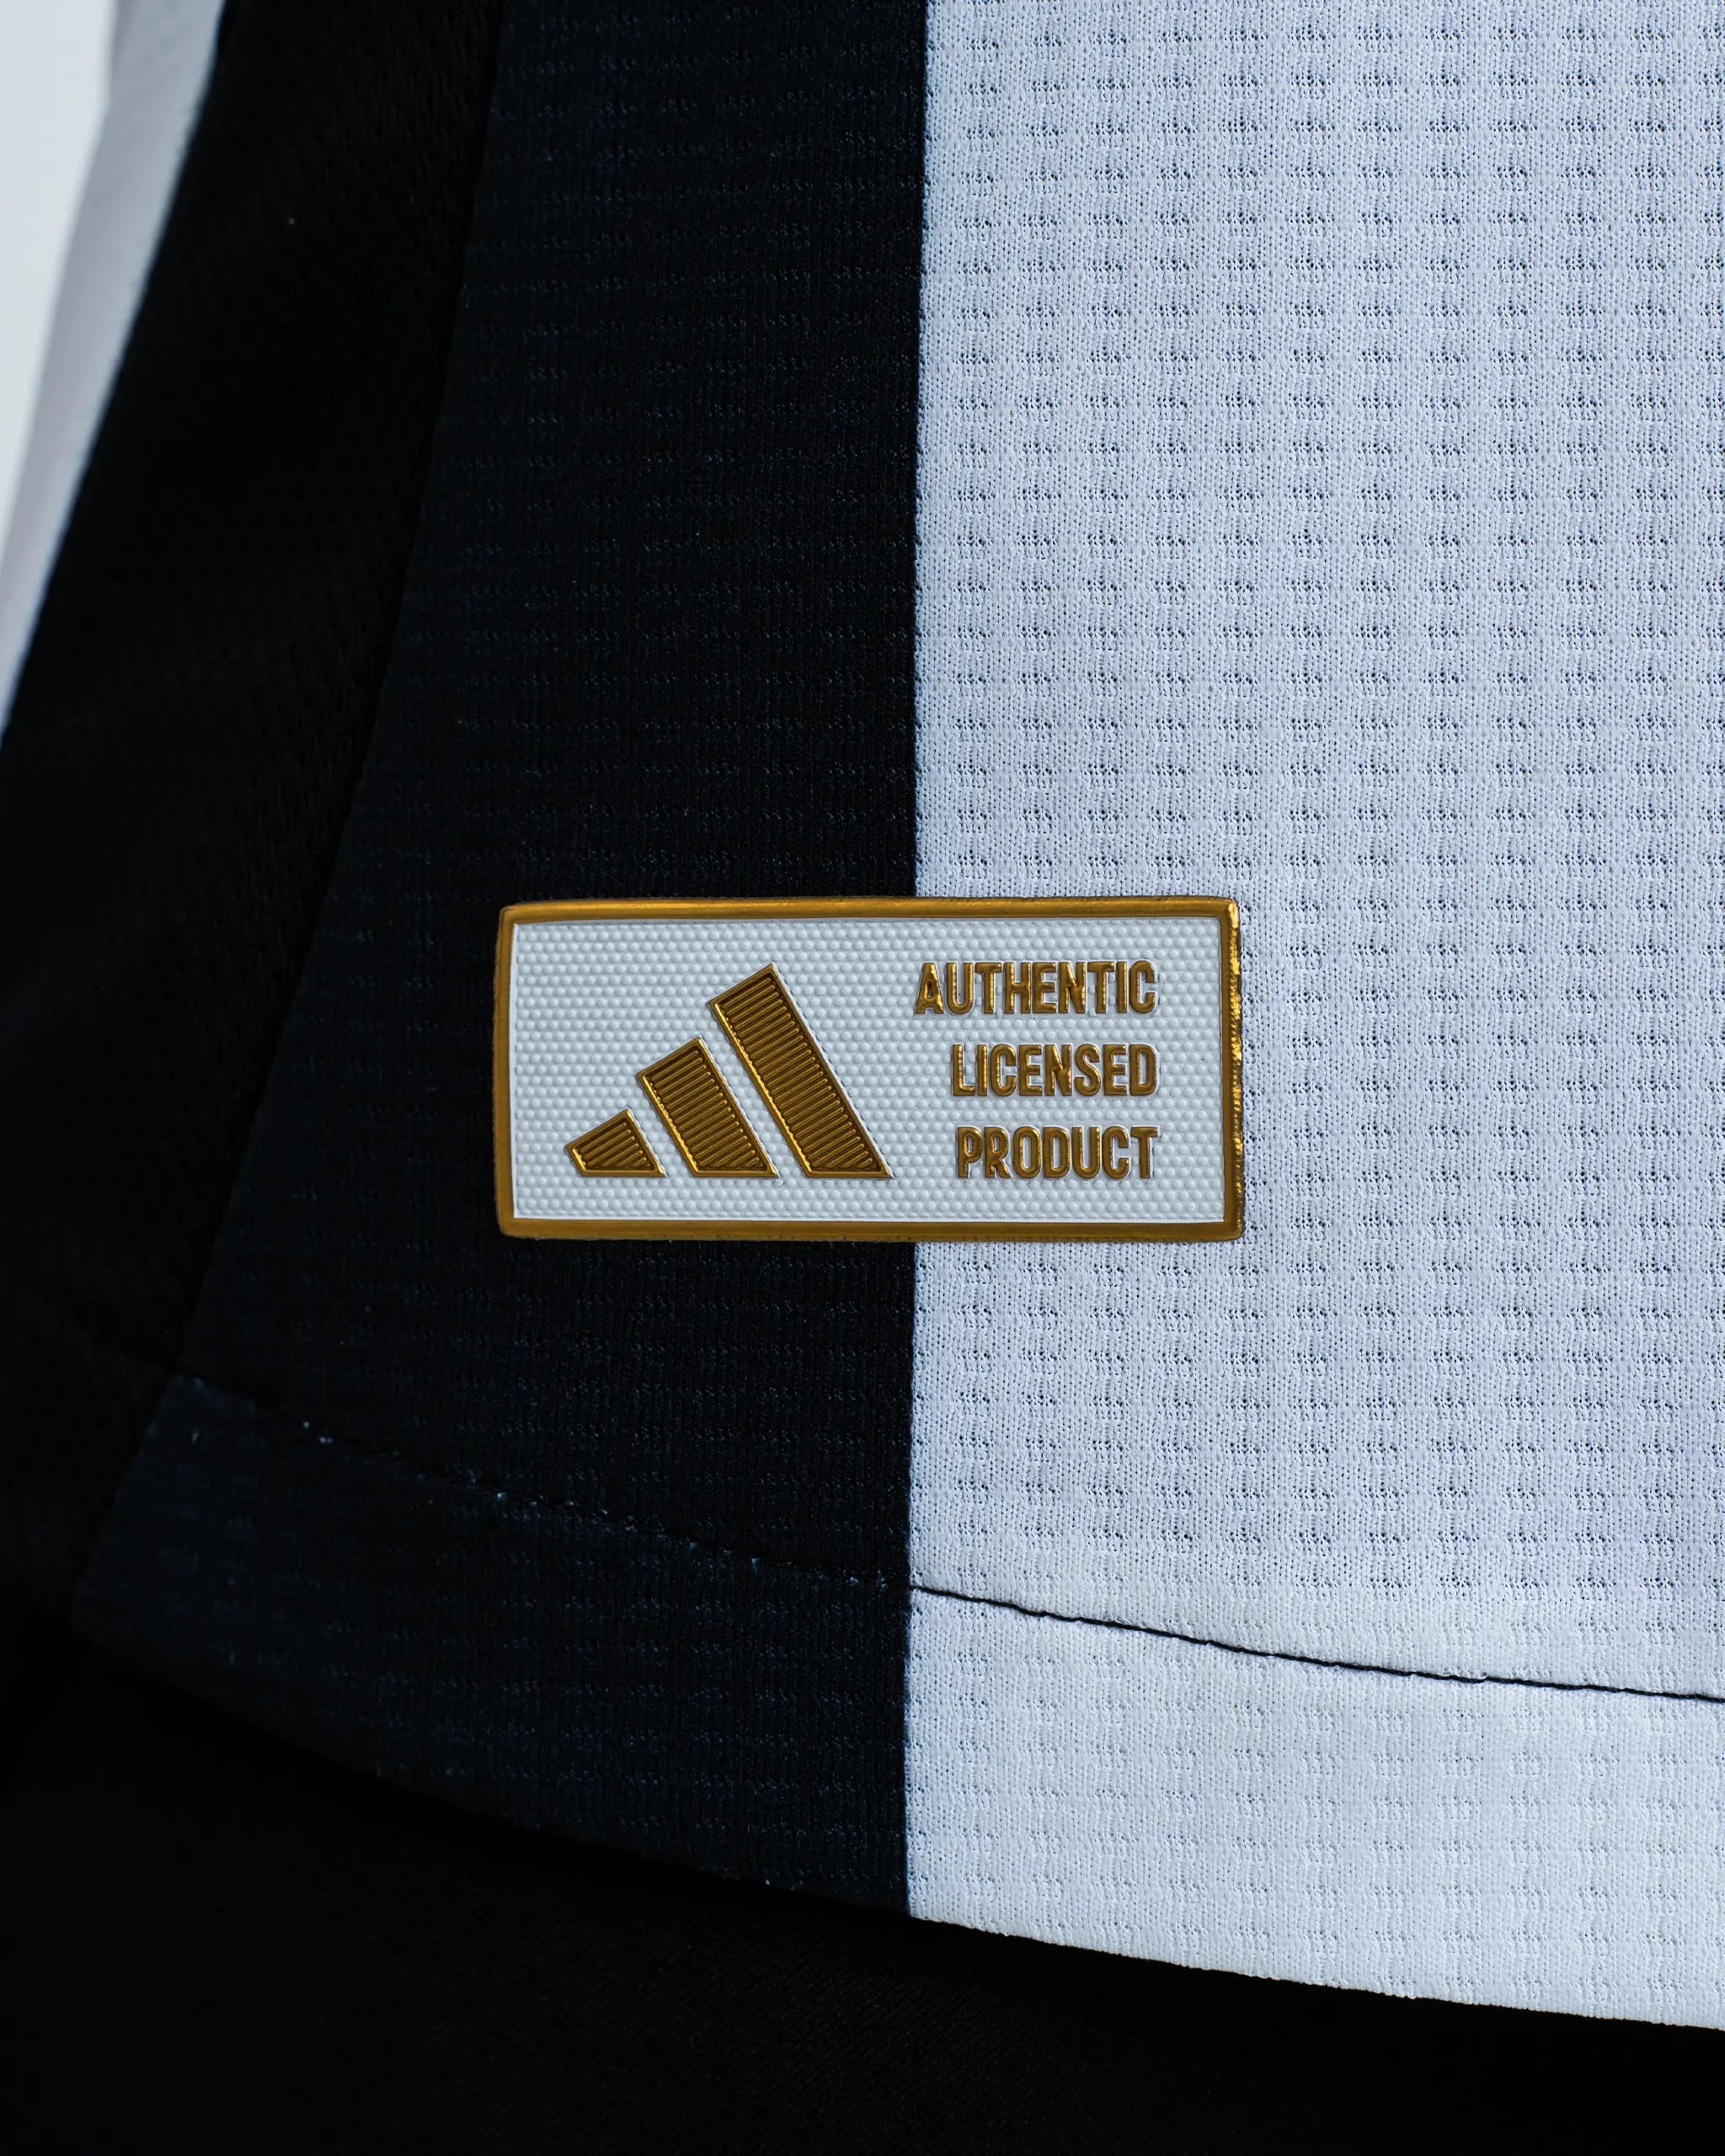 Newcastle United adidas 24/25 Authentic Home Shirt